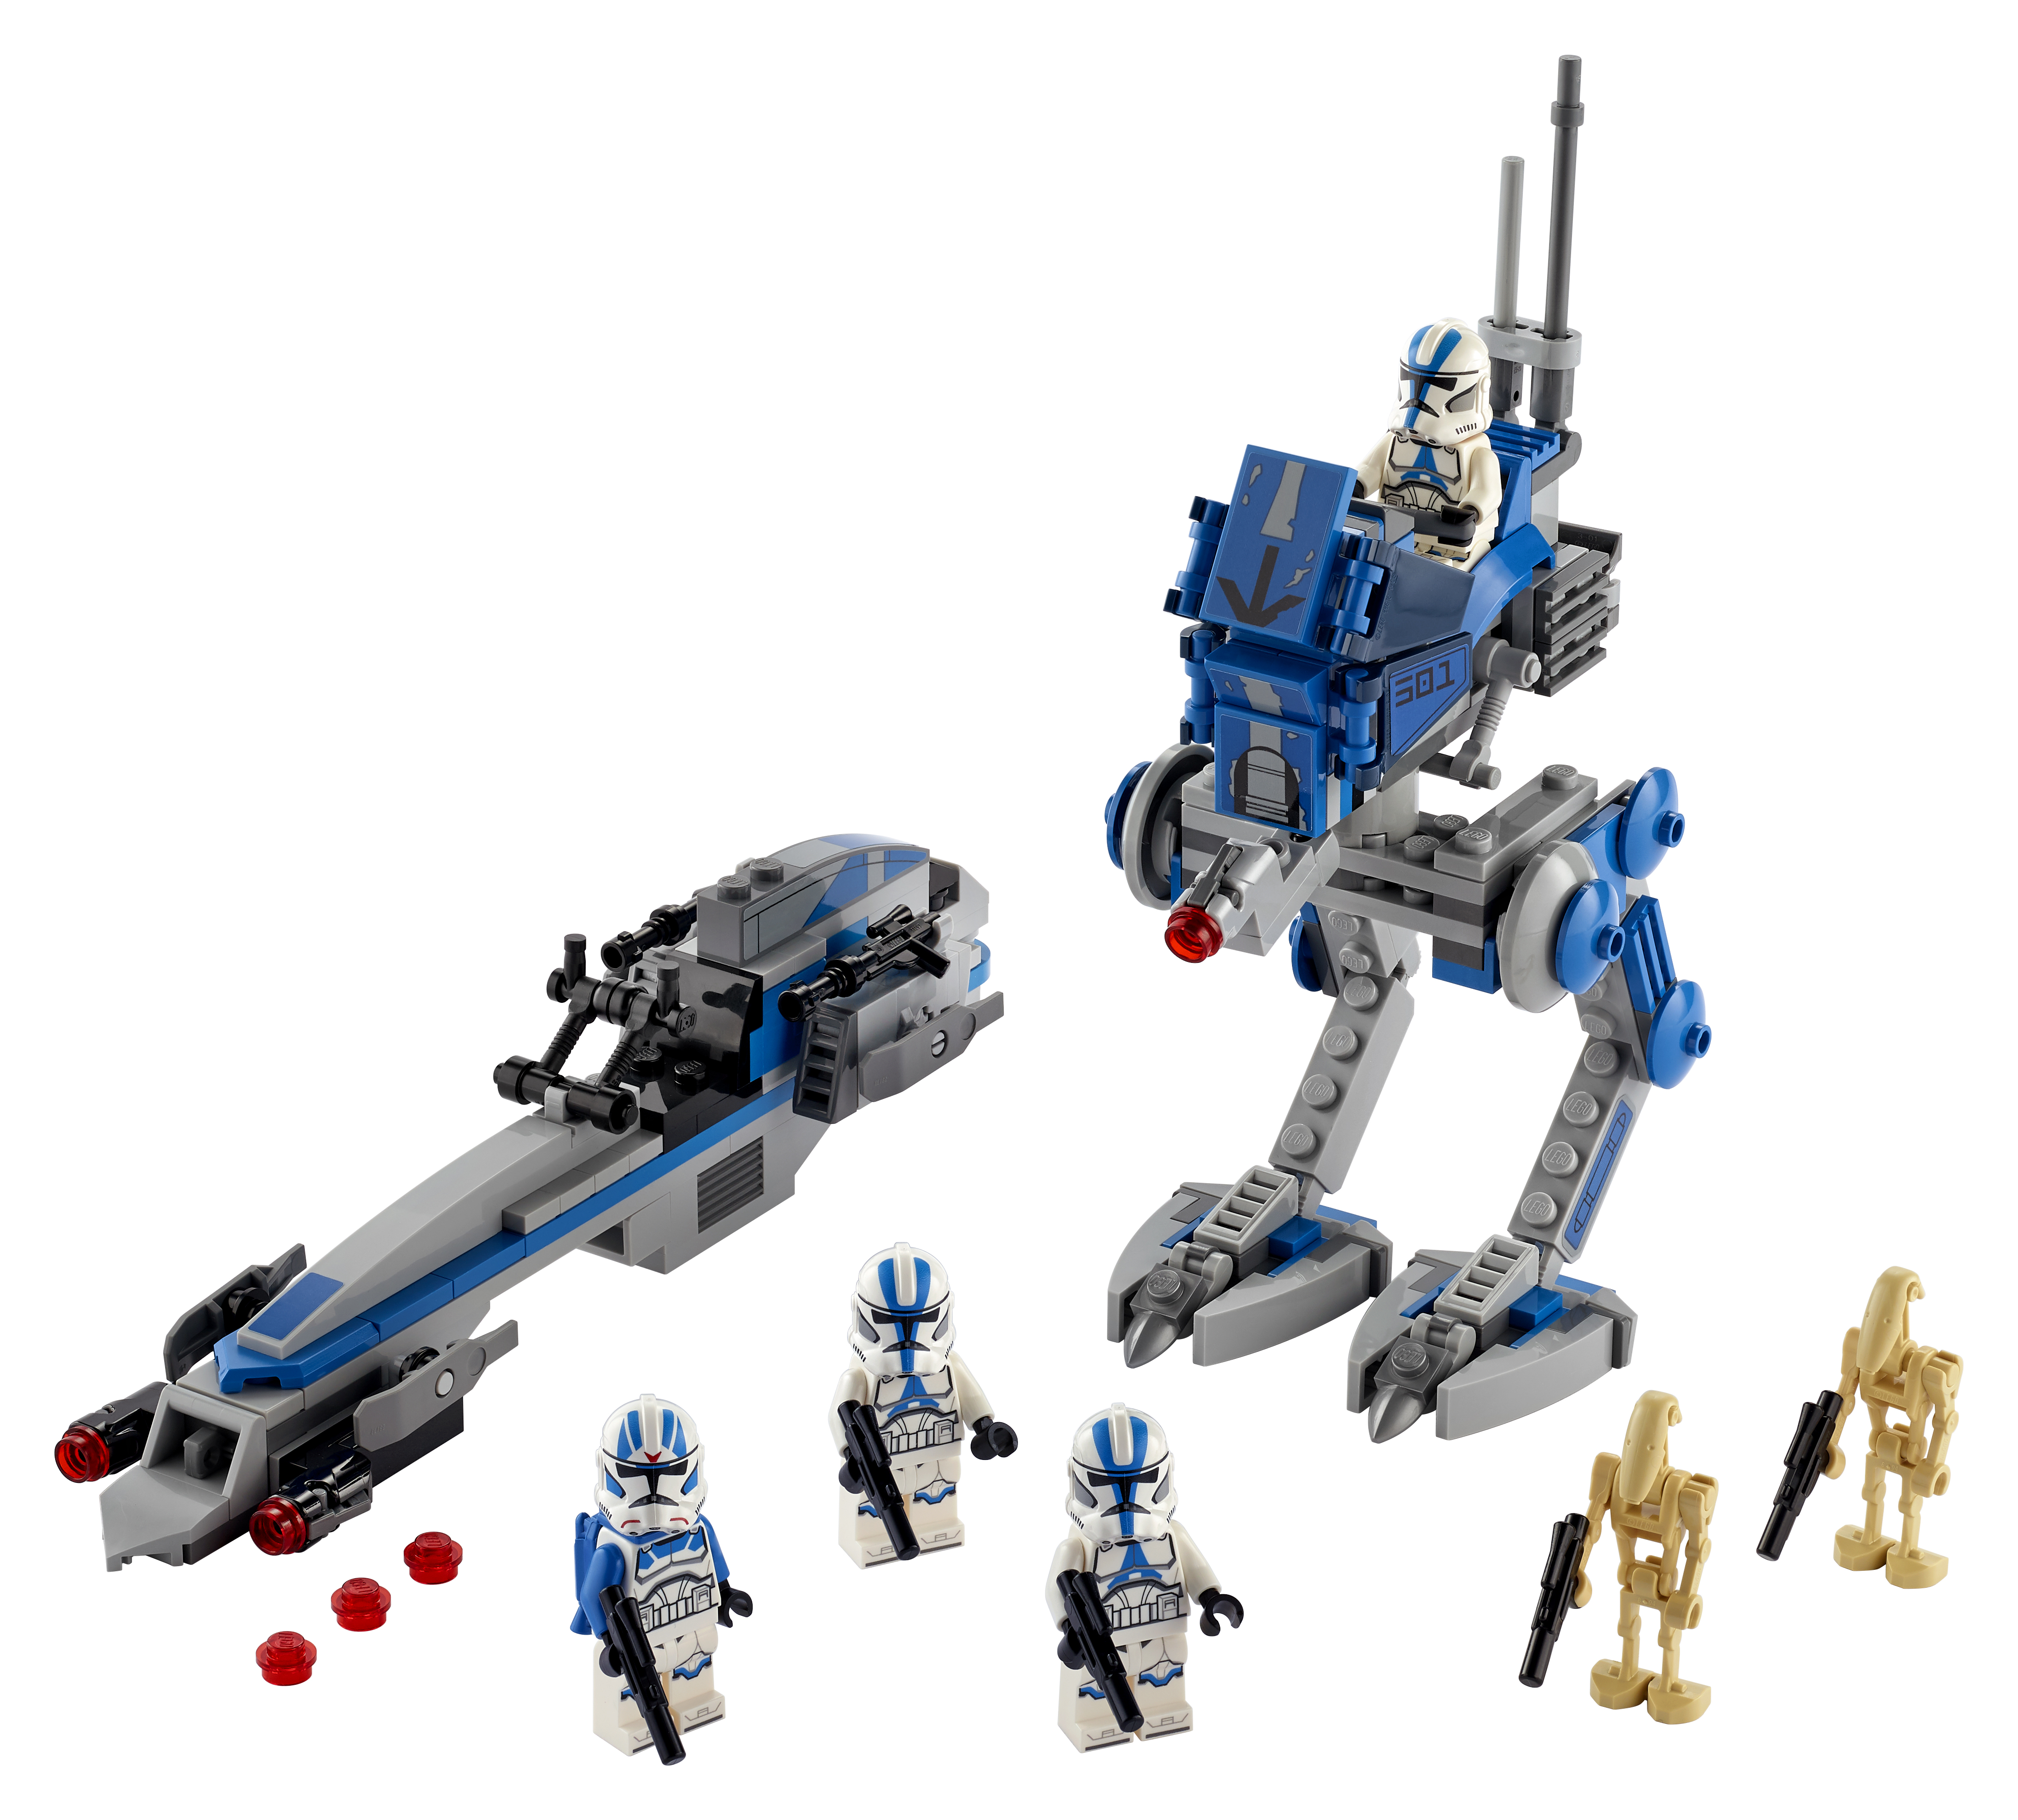 LEGO® Star Wars™ 75280 Clone Troopers™ der 501. Legion